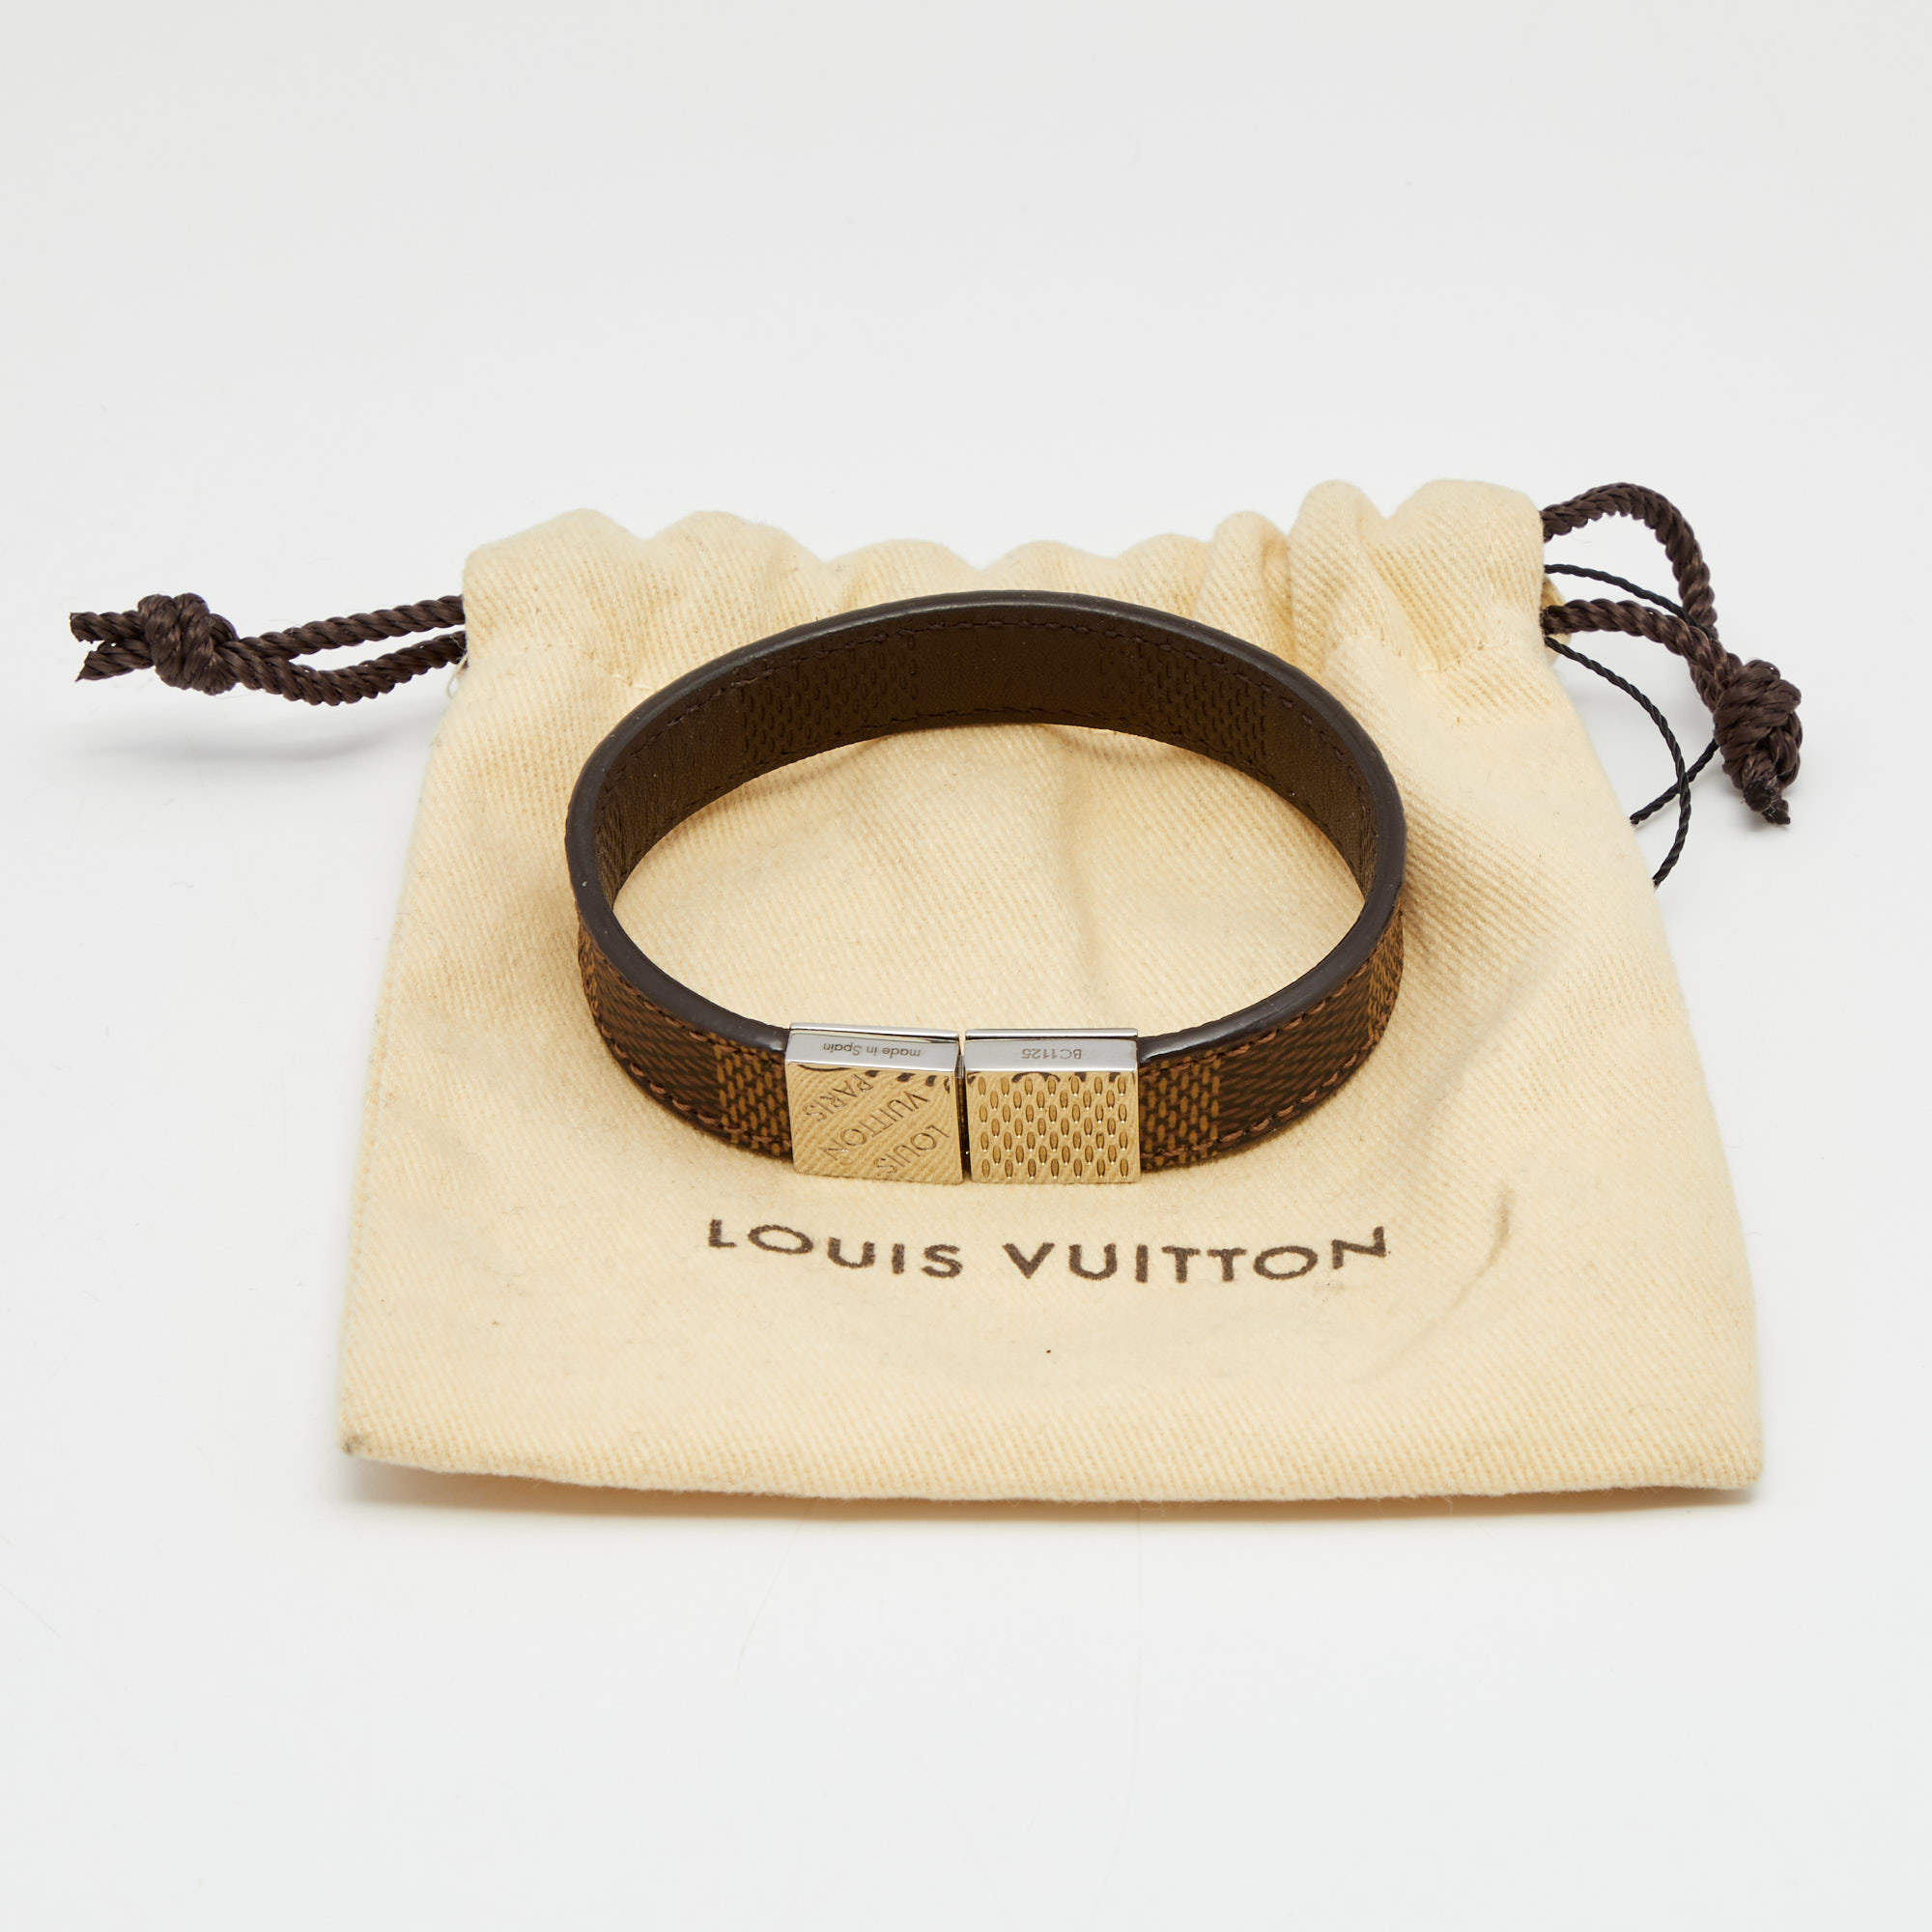 Louis Vuitton Damier lederen armband